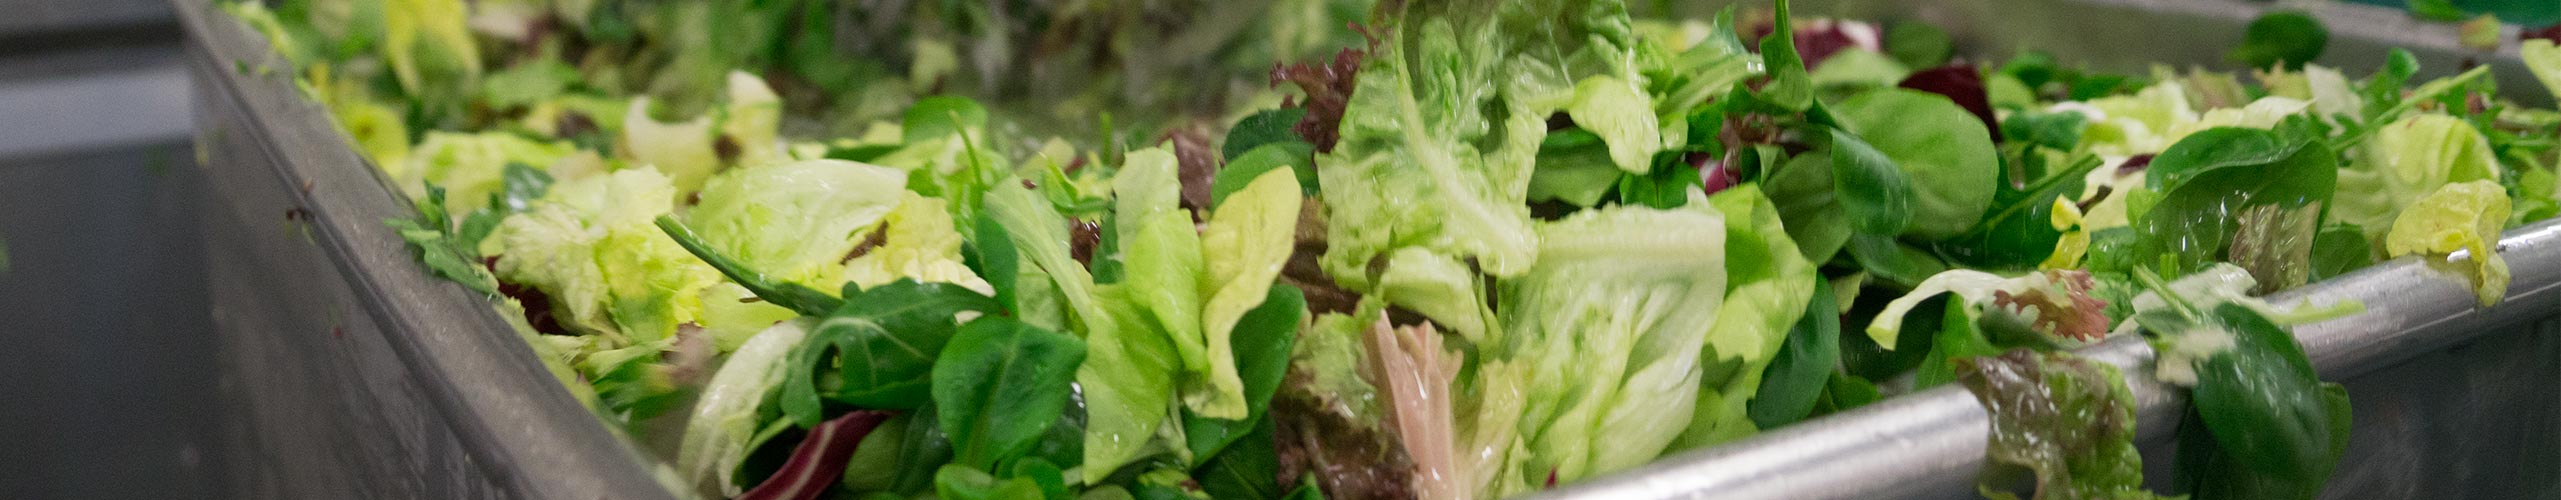 Slider 3 - Gesneden groenten en rauwkost salade - Kees van den Oord B.V.